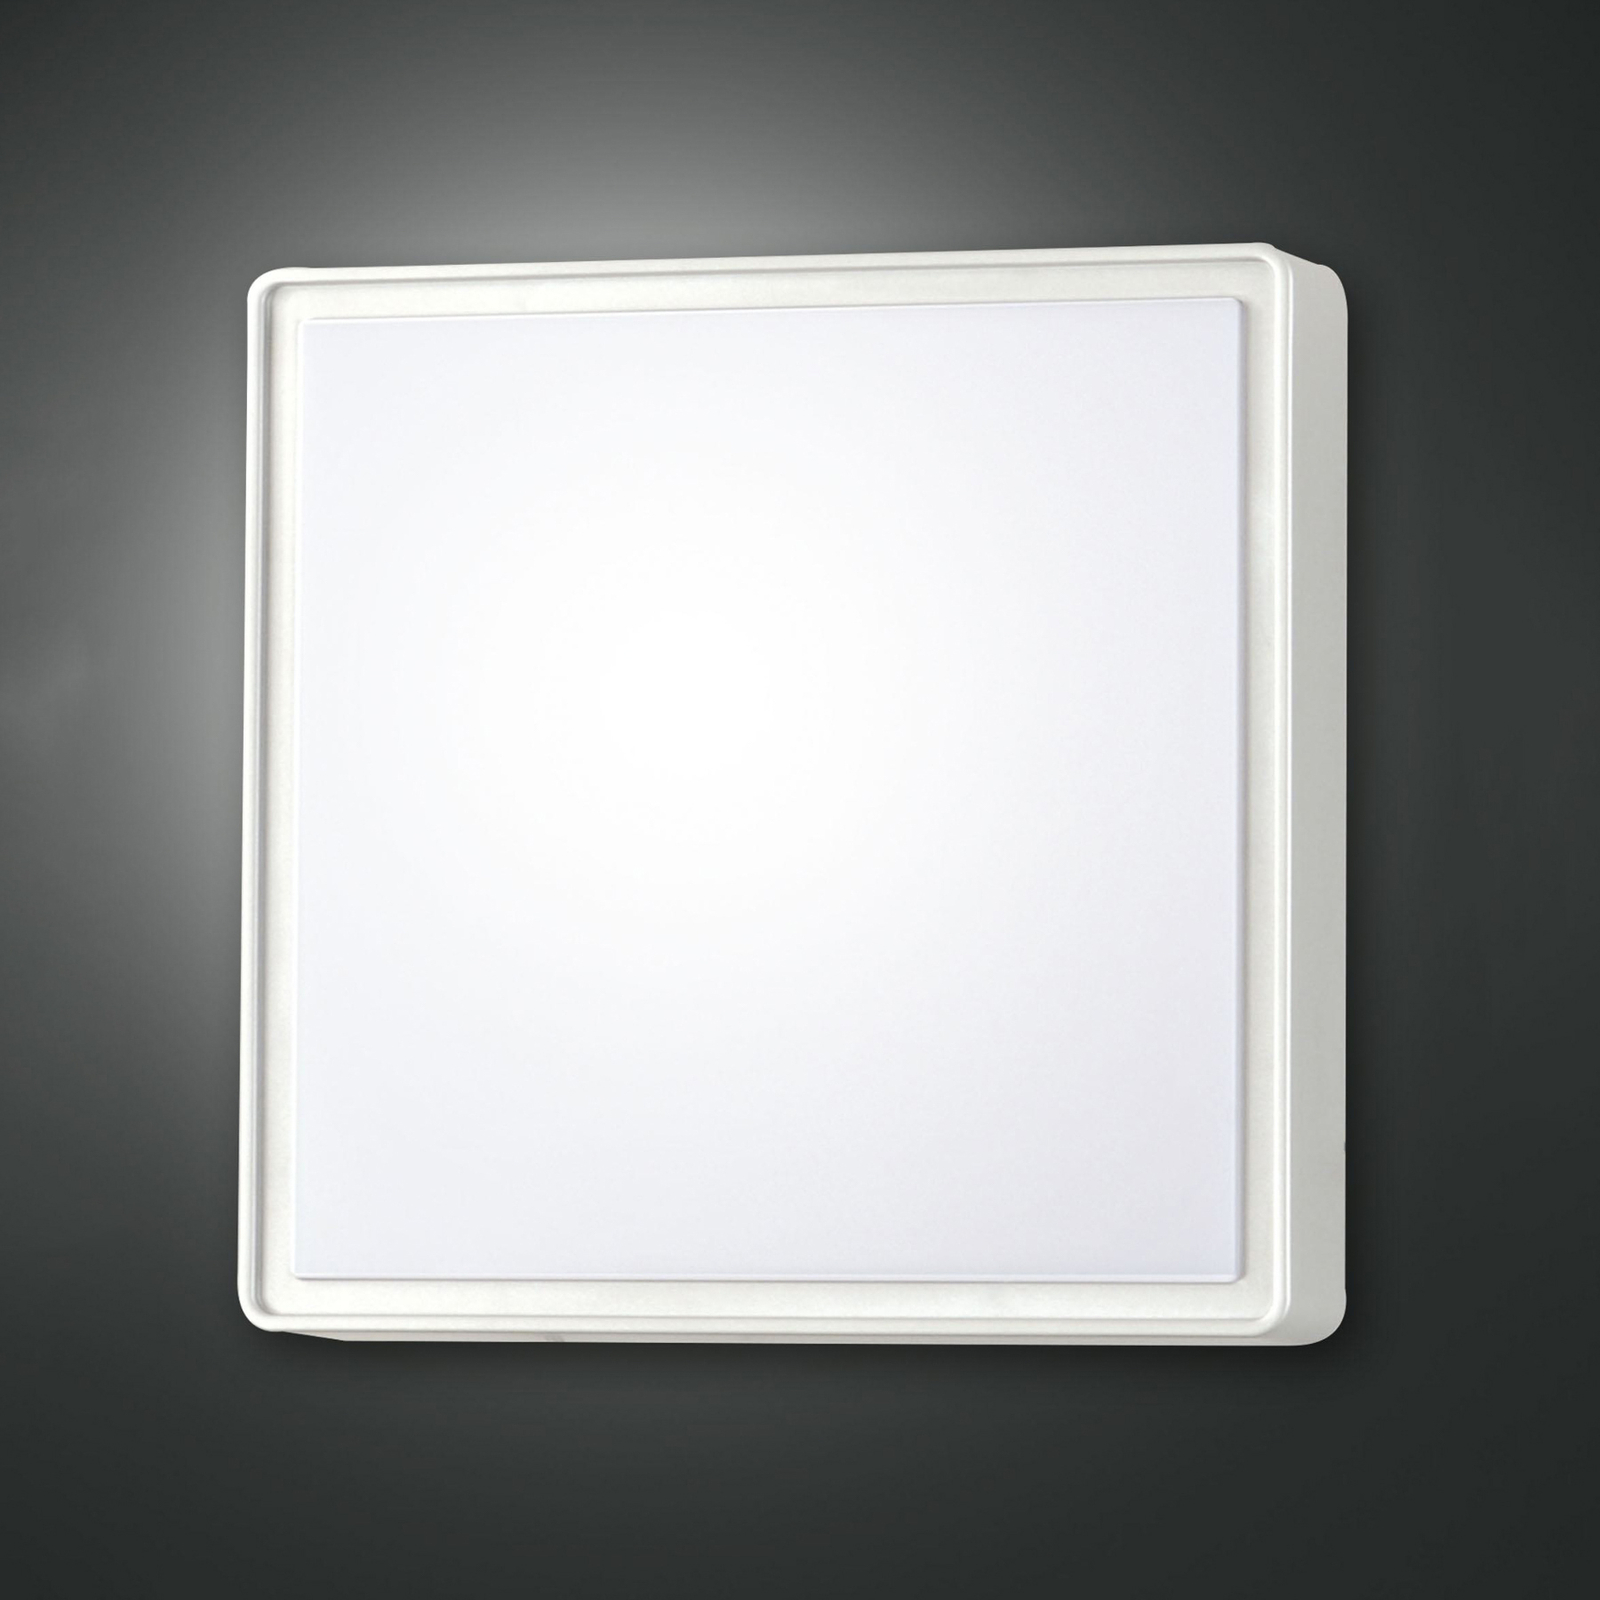 Oban wall light, 30 cm x 30 cm, 2 x E27, white, IP65